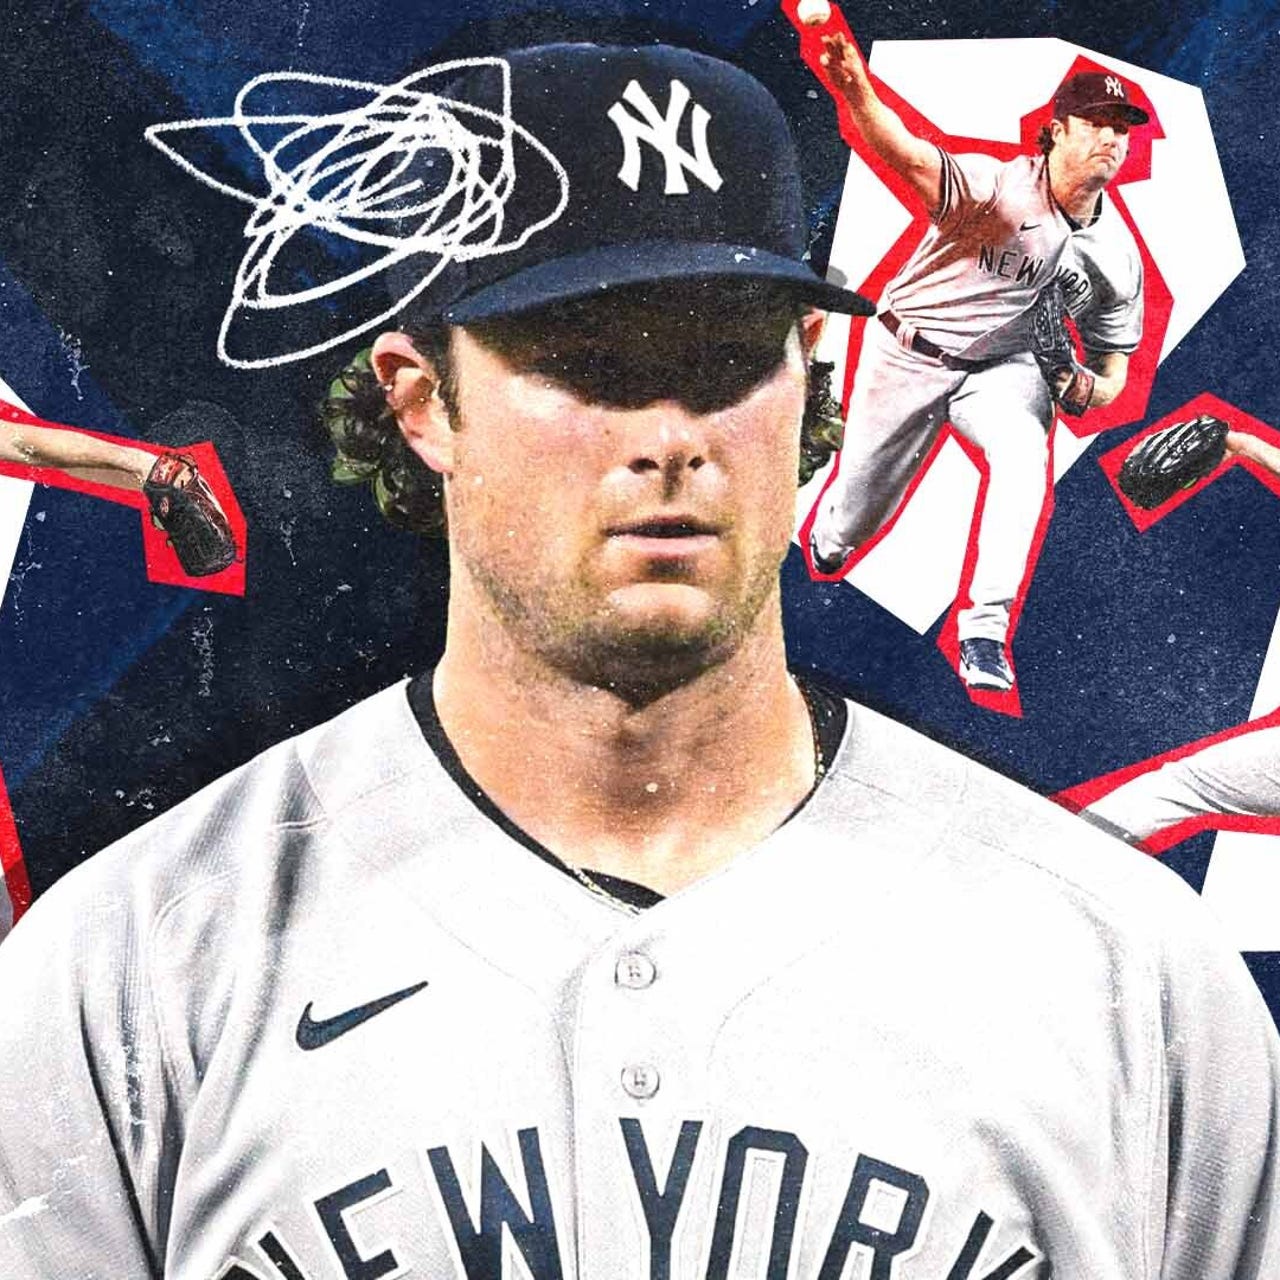 Kyle Higashioka belts three homers in Yankees' destruction of Jays